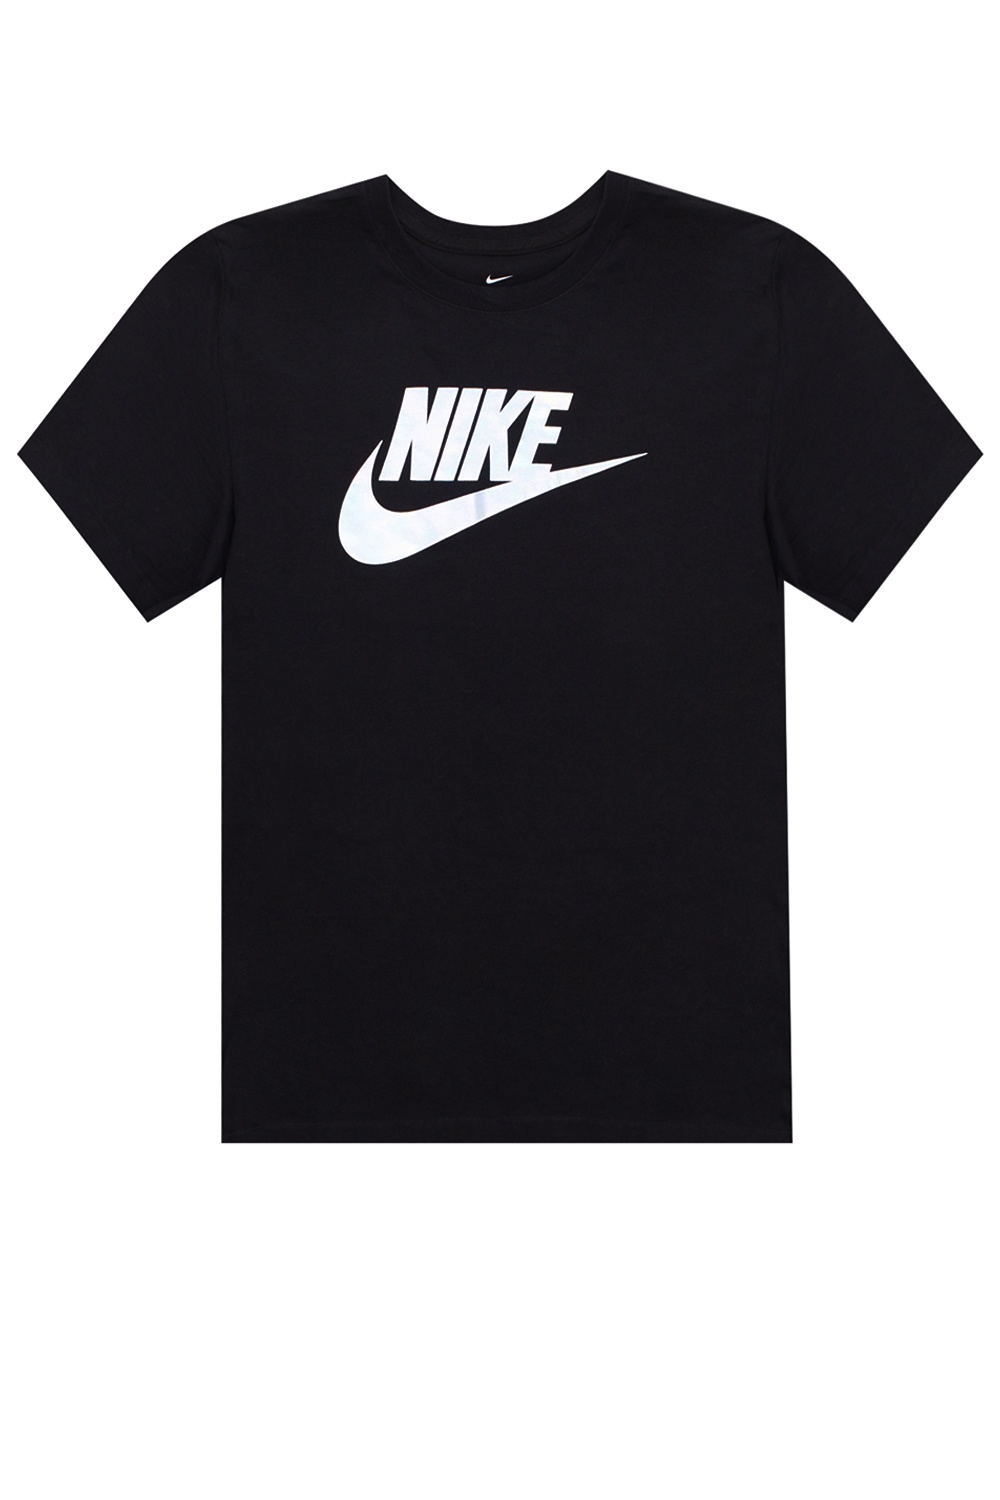 Nike Logo T Shirt Flash Sales, 56% OFF | campingcanyelles.com